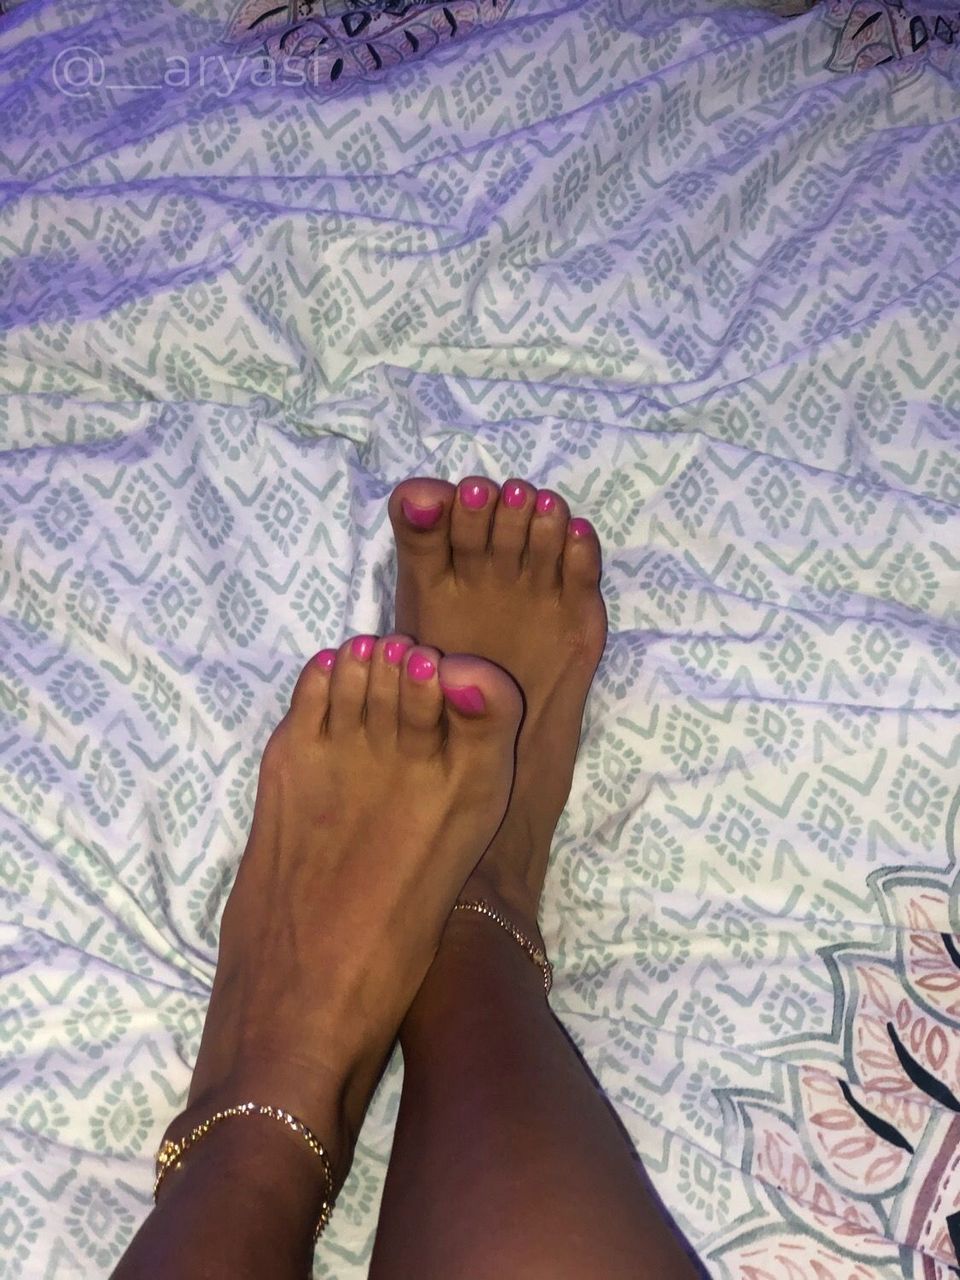 Arya Sf Fresh Feet